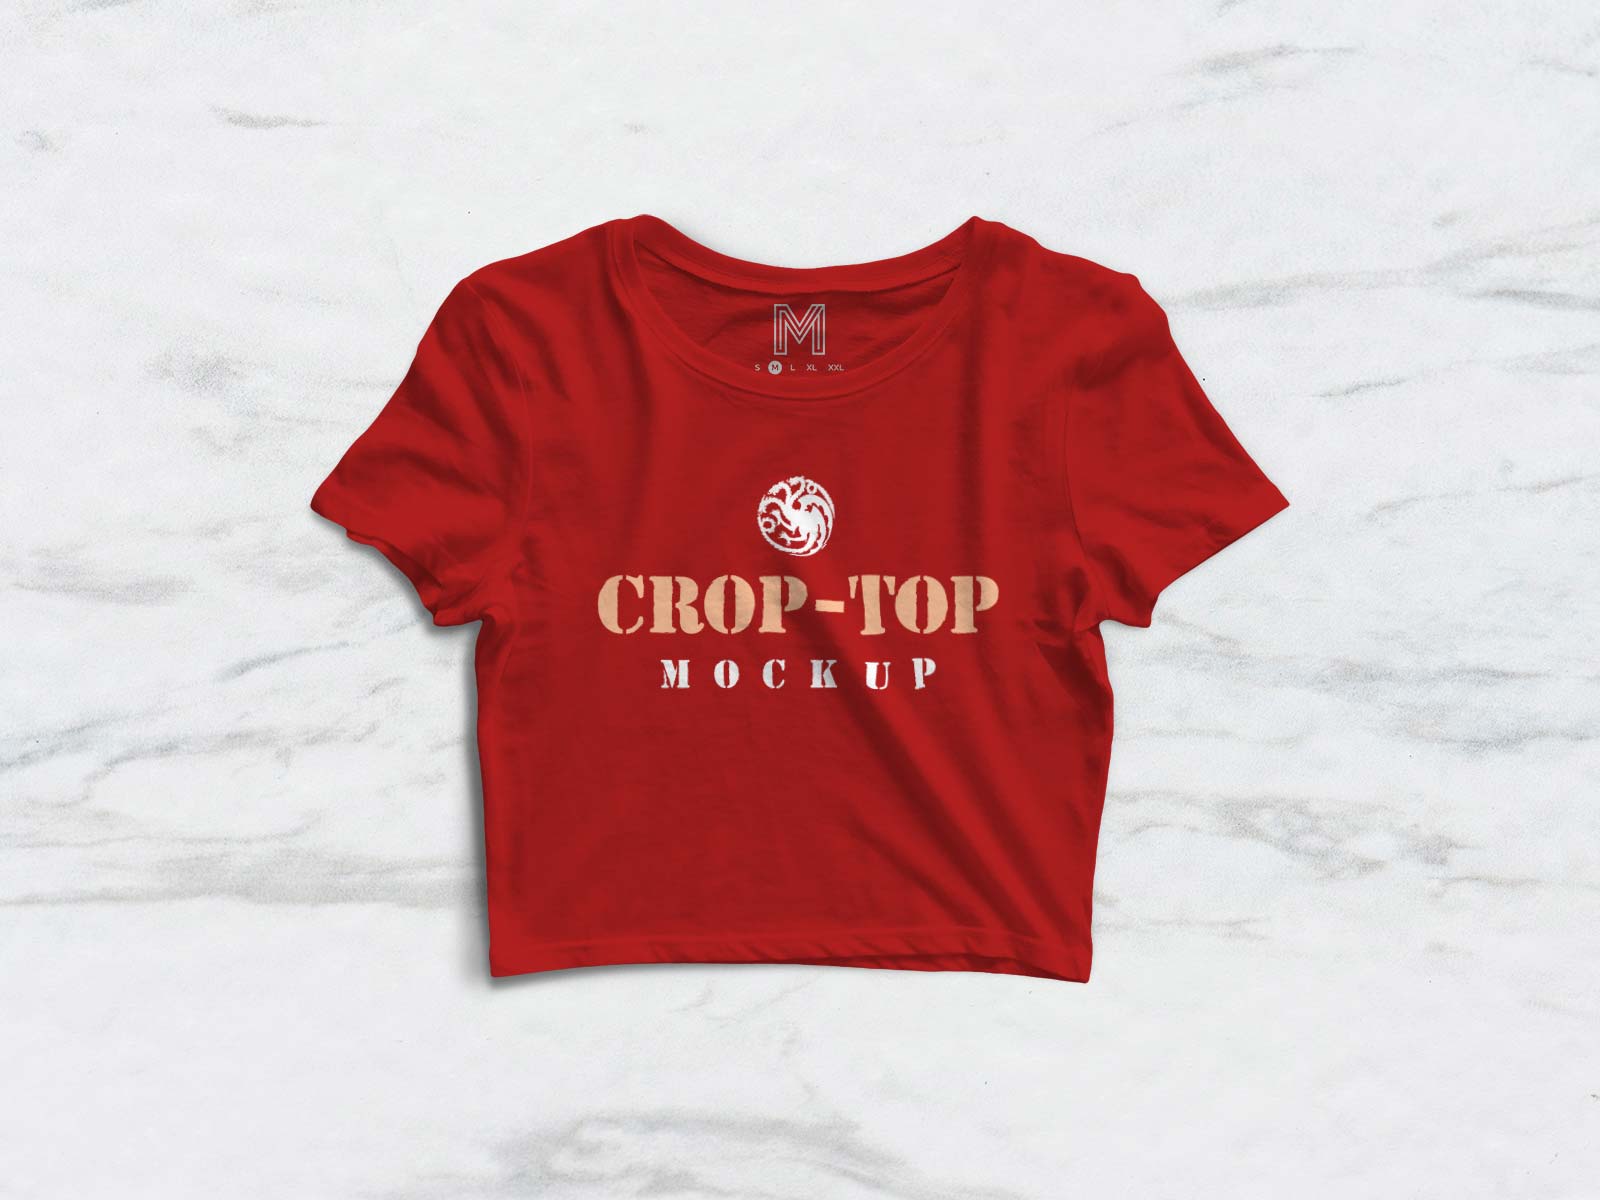 Free-Crop Top-T-Shirt-Mockup-PSD-2